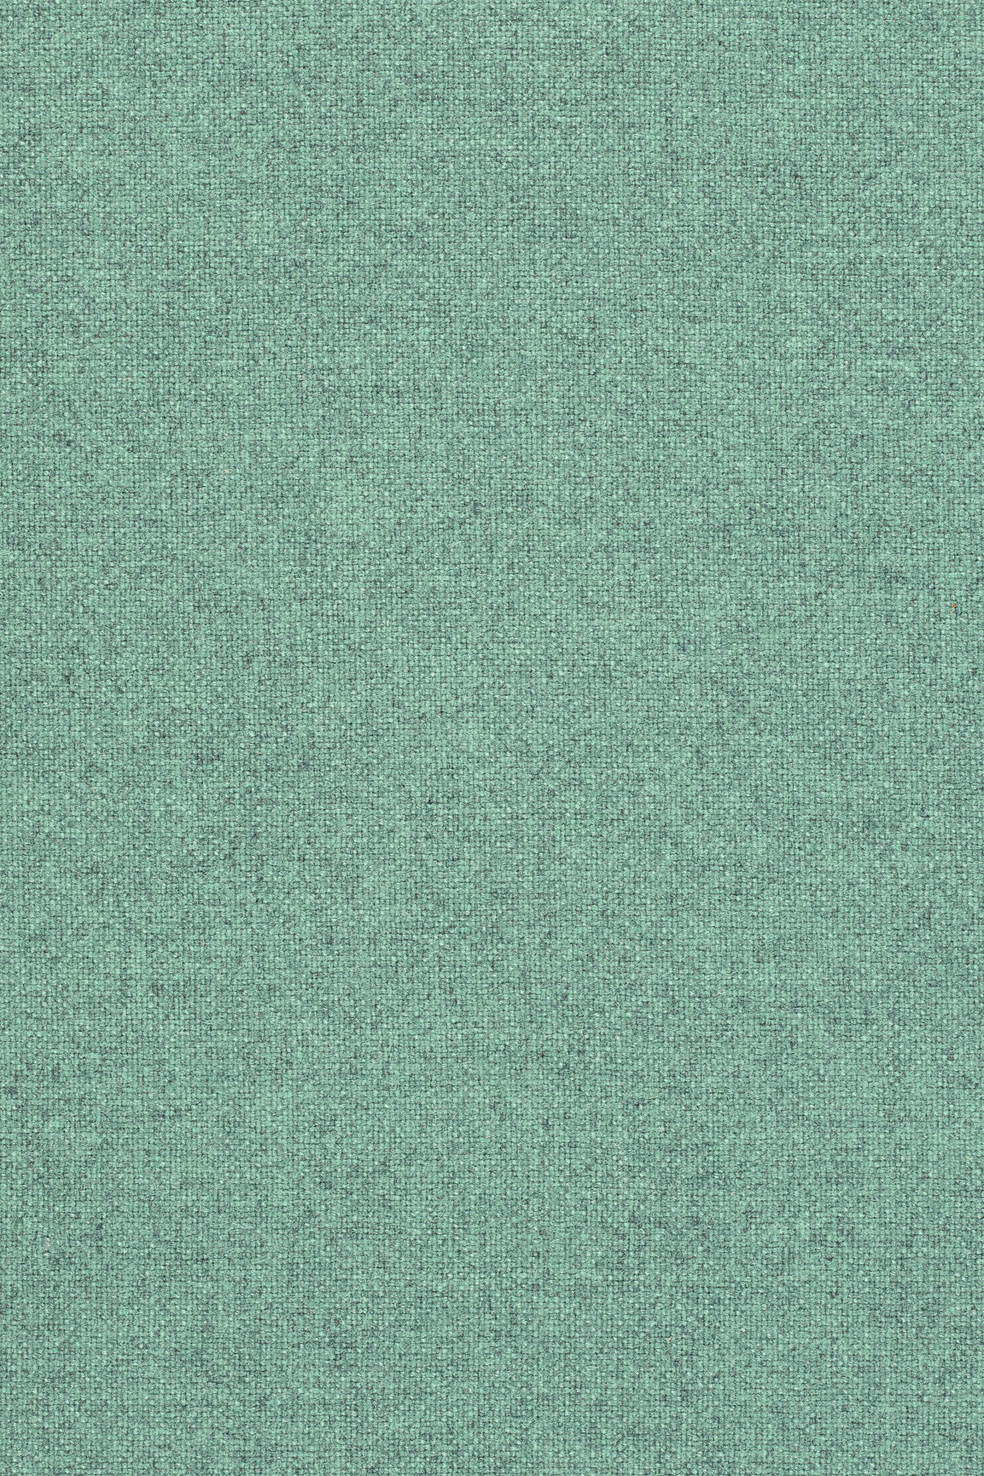 Fabric sample Tonica 2 933 green